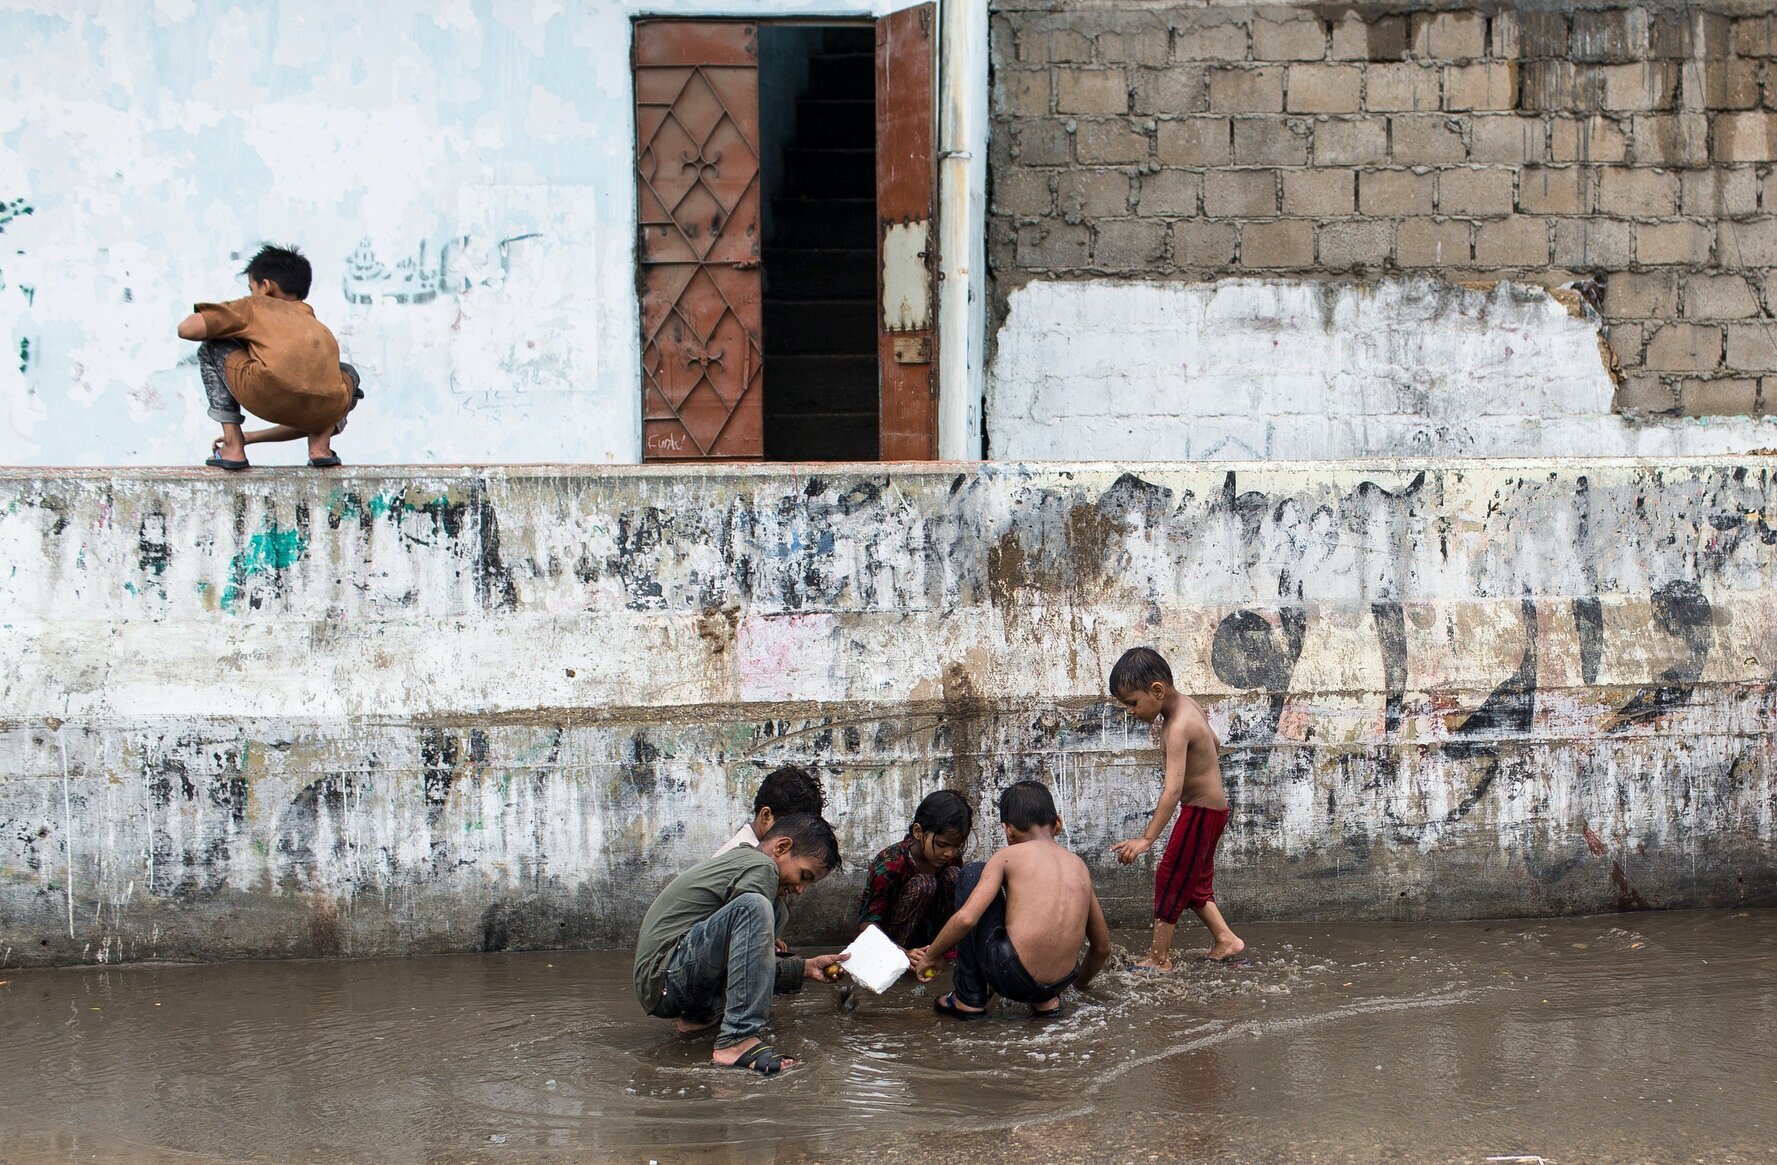  Children play in stagnant water.  